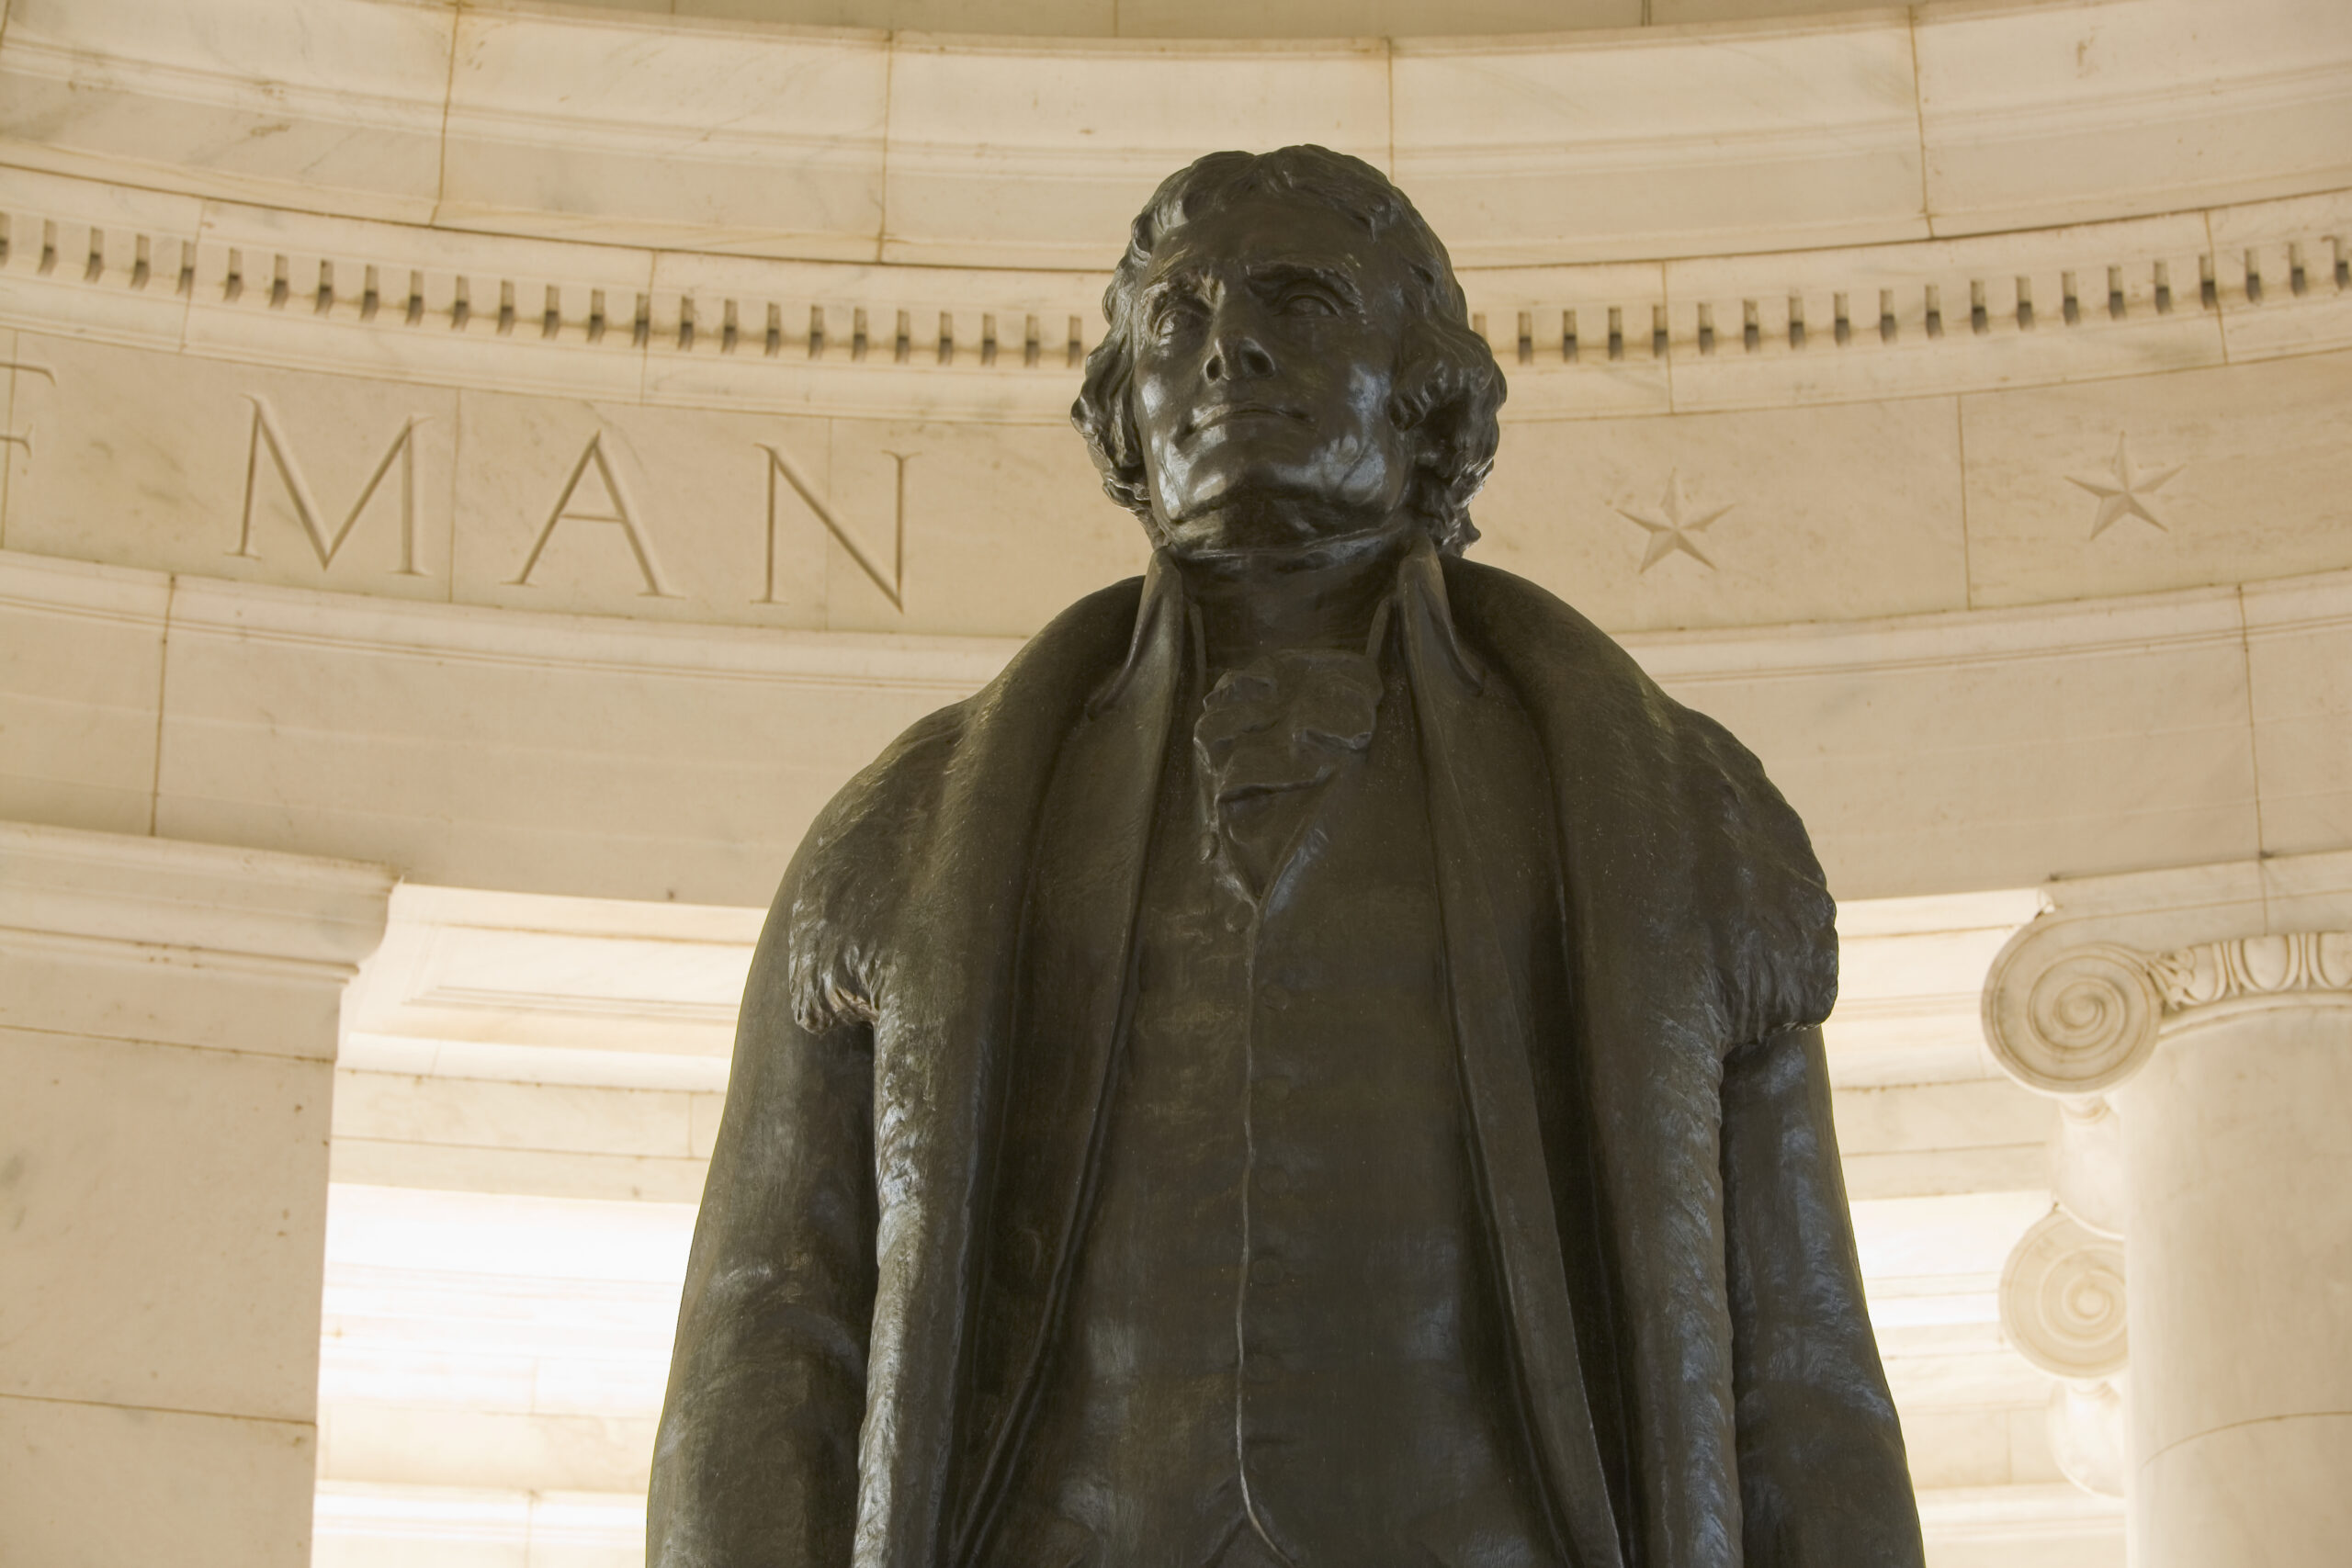 Thomas Jefferson statue inside the Jefferson Memorial in Washington, D.C. (Rudy Sulgan/The Image Bank via Getty Images)